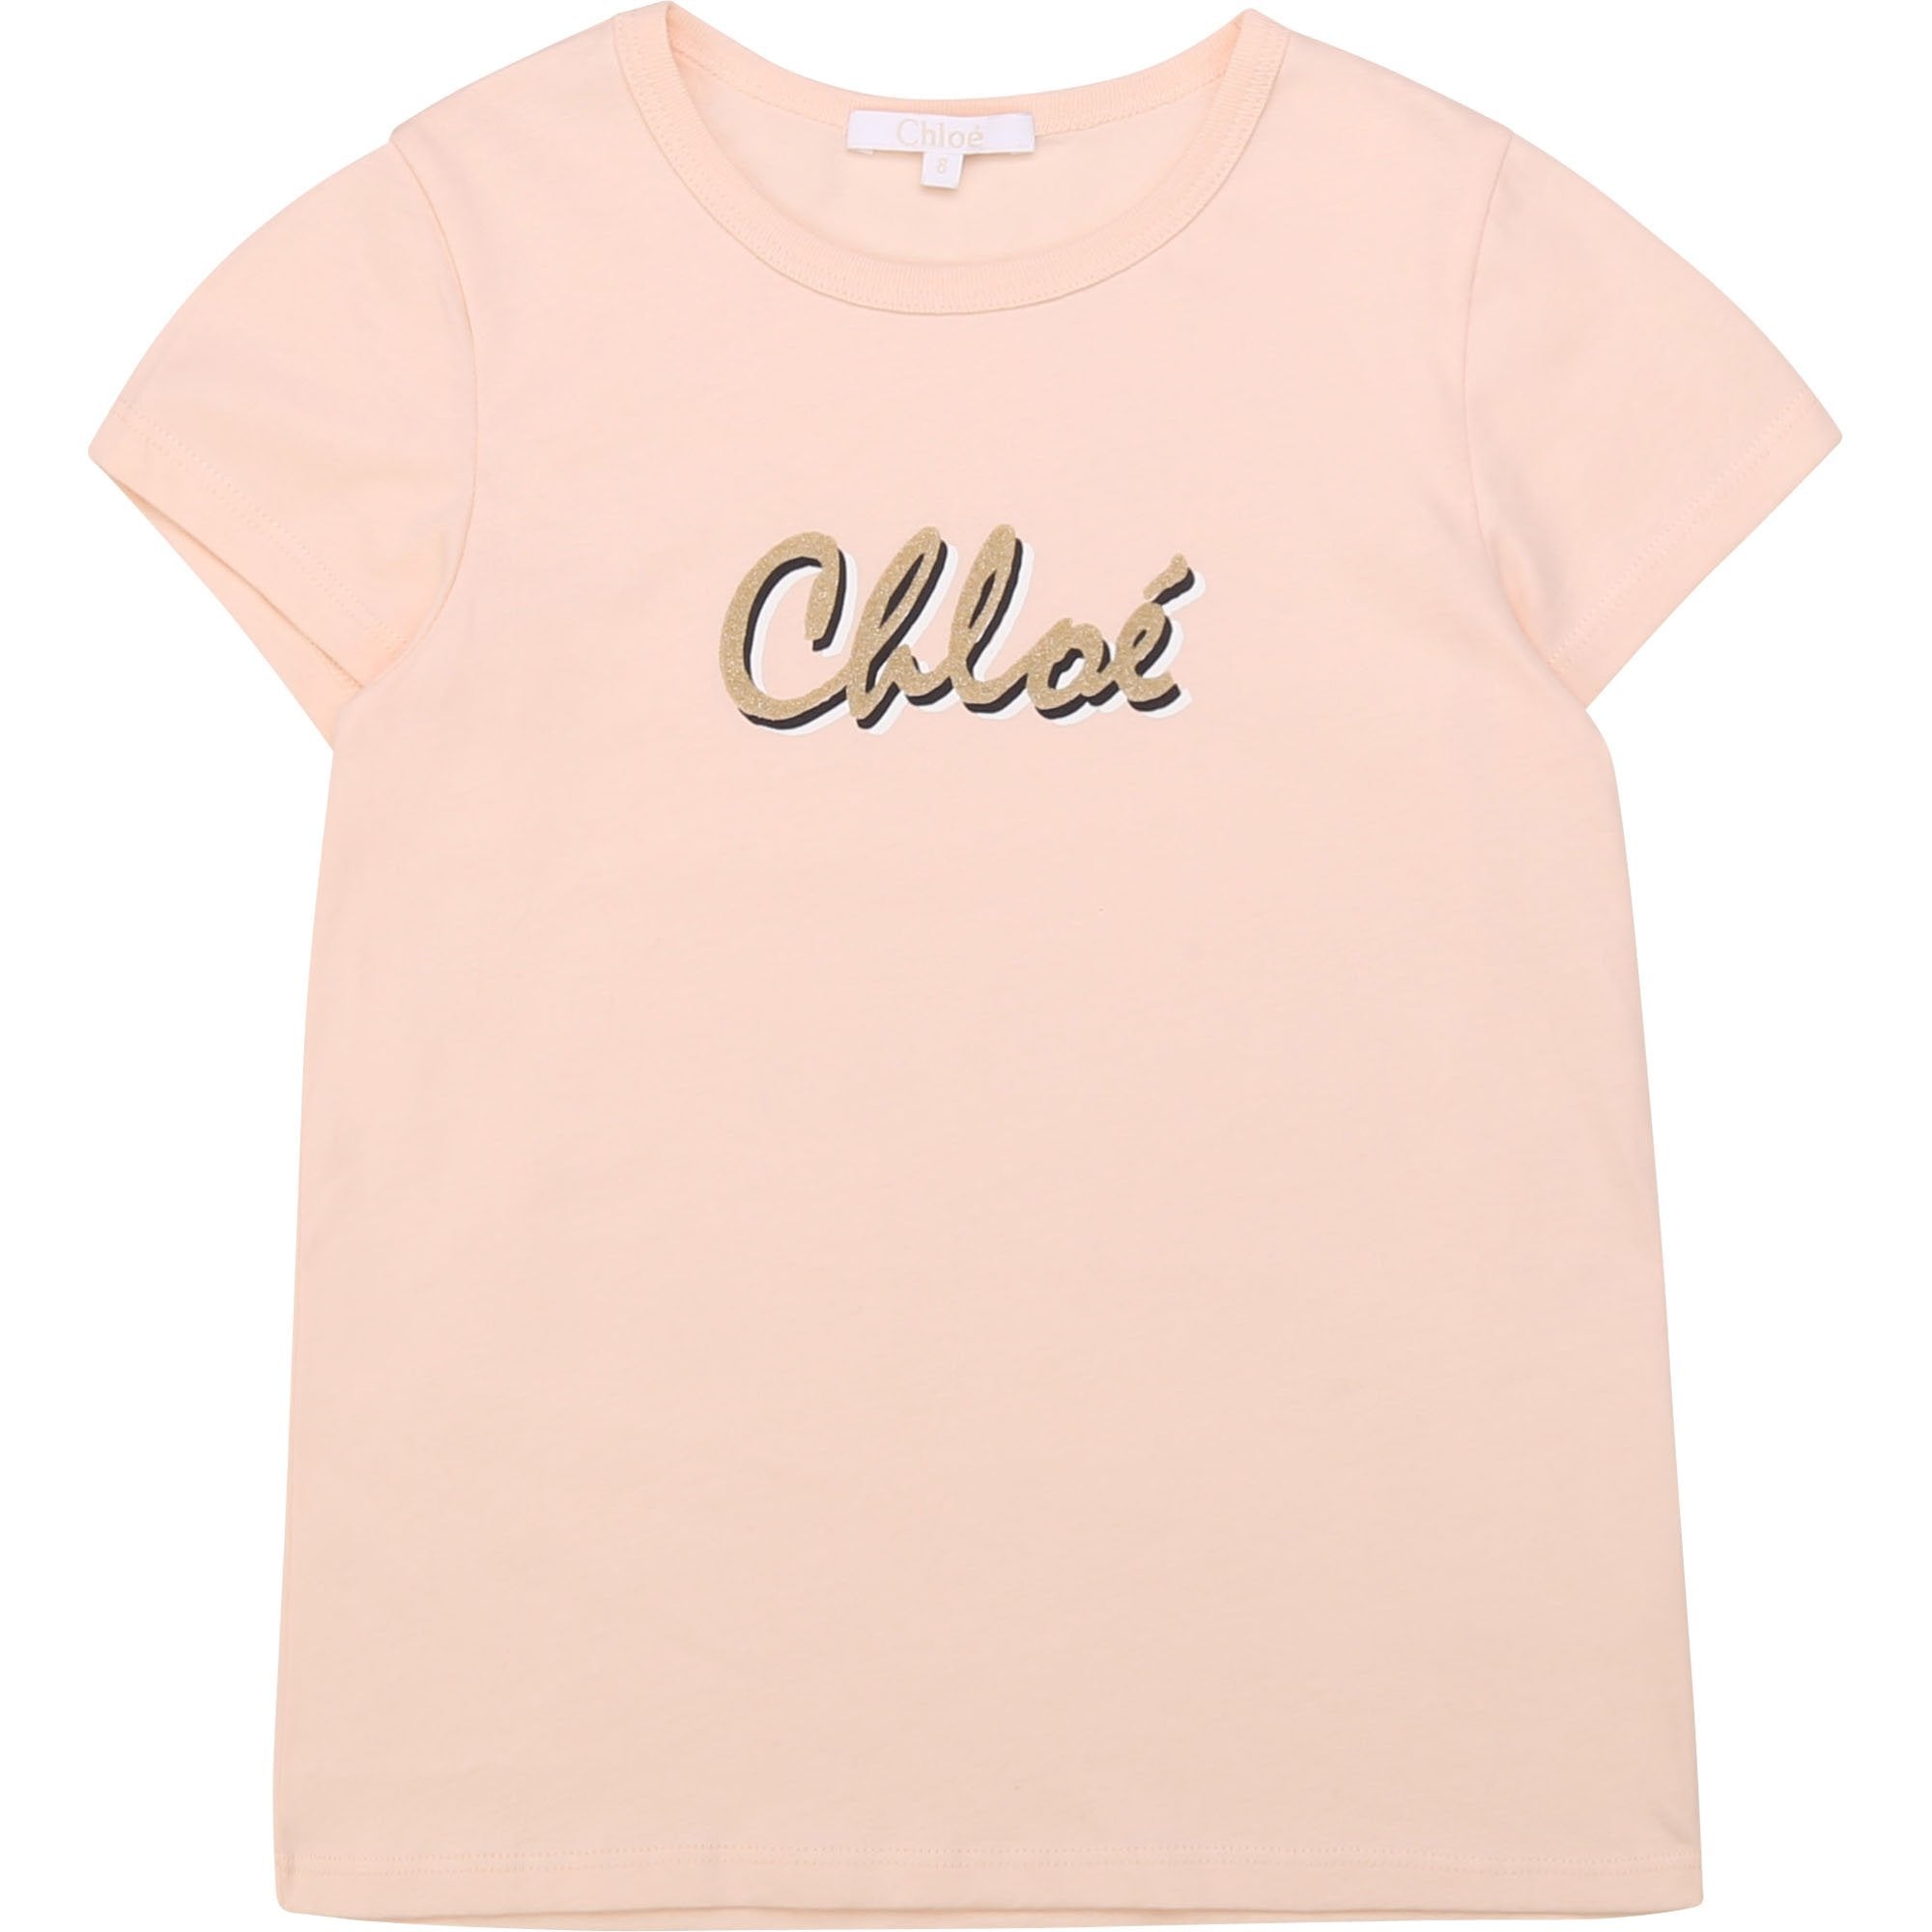 Chloe Girls Cotton T-Shirt Pink